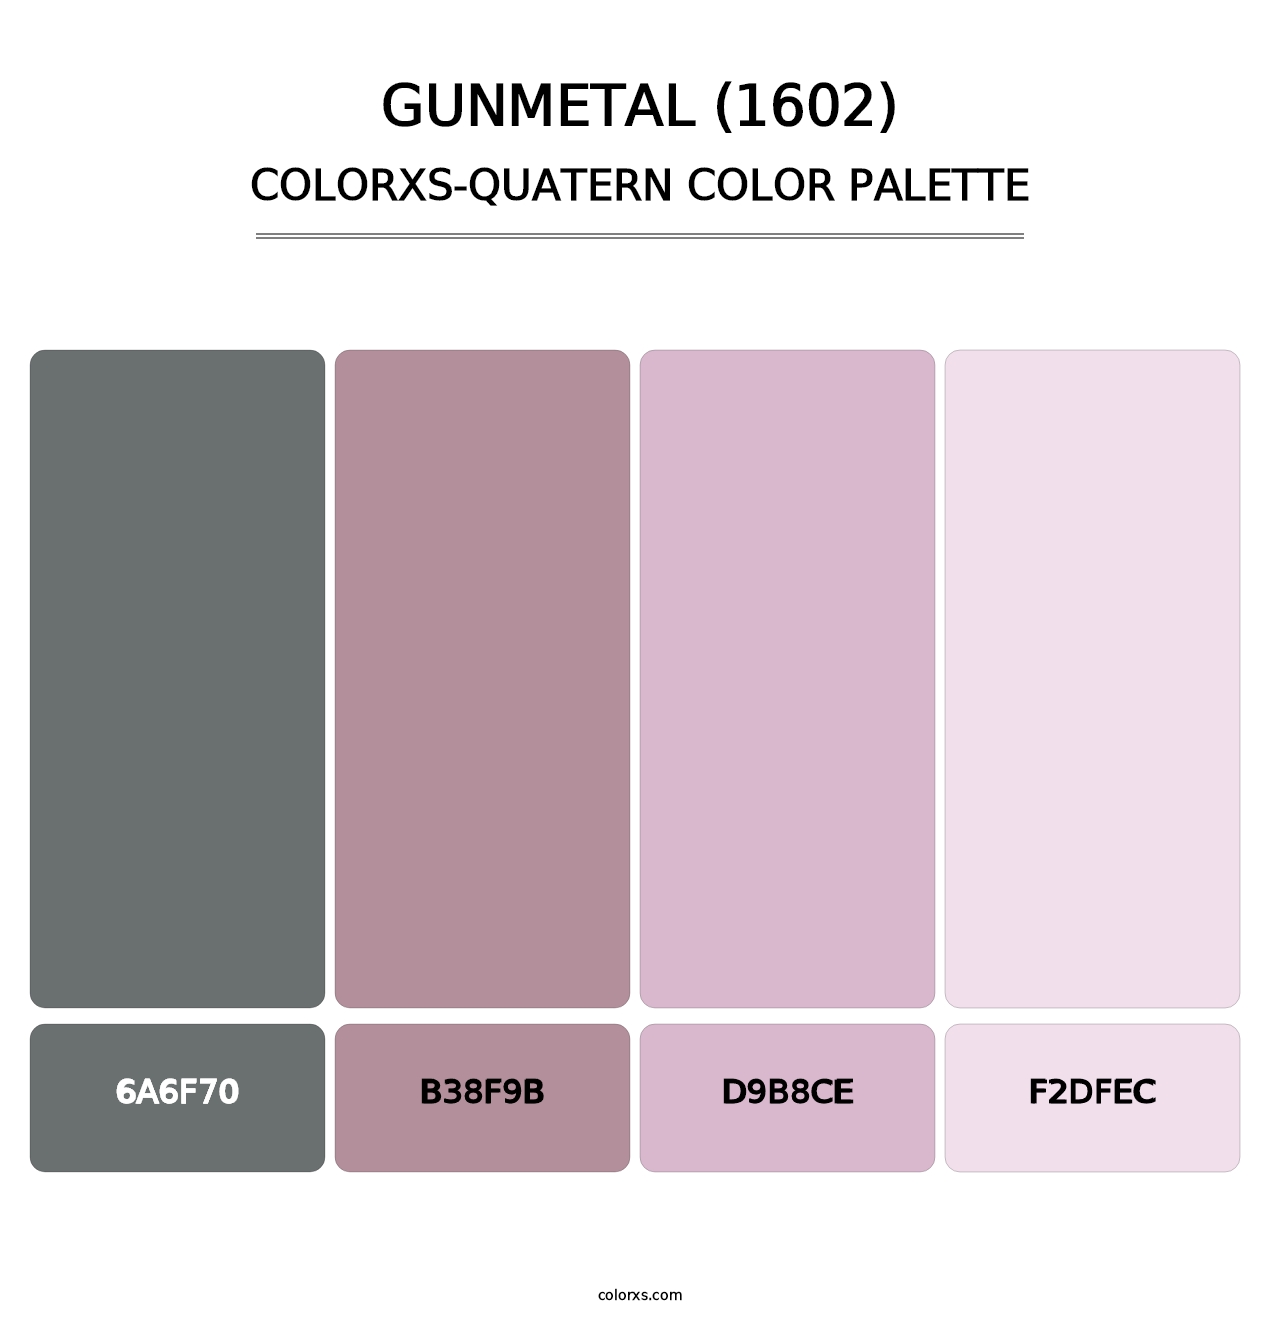 Gunmetal (1602) - Colorxs Quatern Palette